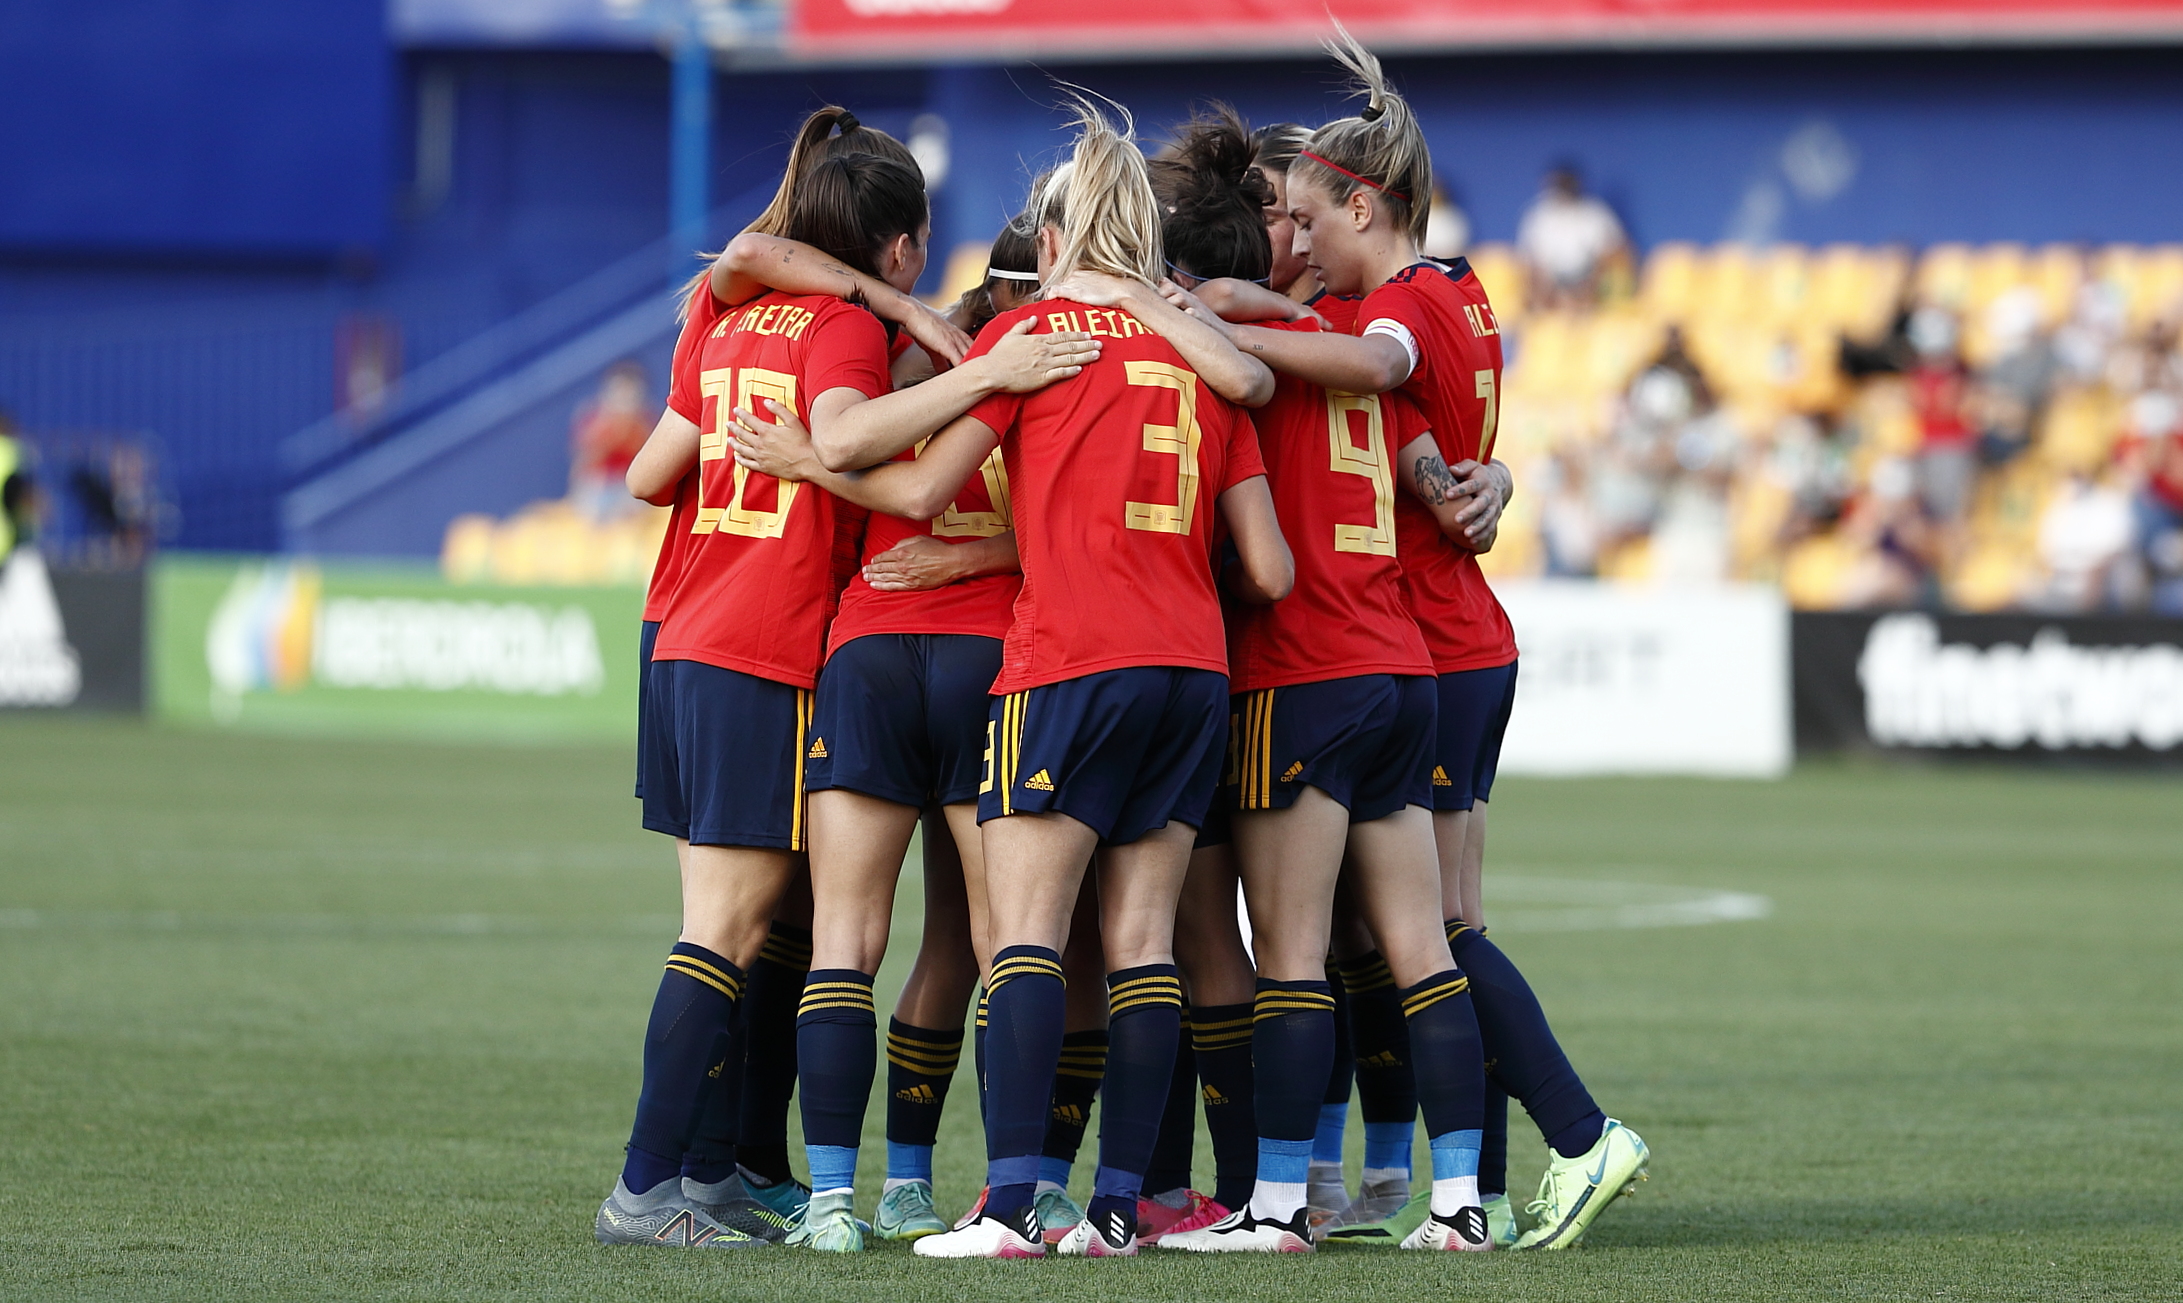 Selección Española Femenina de Fútbol on "📝 CRÓNICA I La Selección española femenina no conoce sus límites. 🇪🇸🆚🇩🇰 I 3-0 #JugarLucharYganar 🔗 https://t.co/ujIInTxkUs https://t.co/Swg8m1rMFm" / Twitter